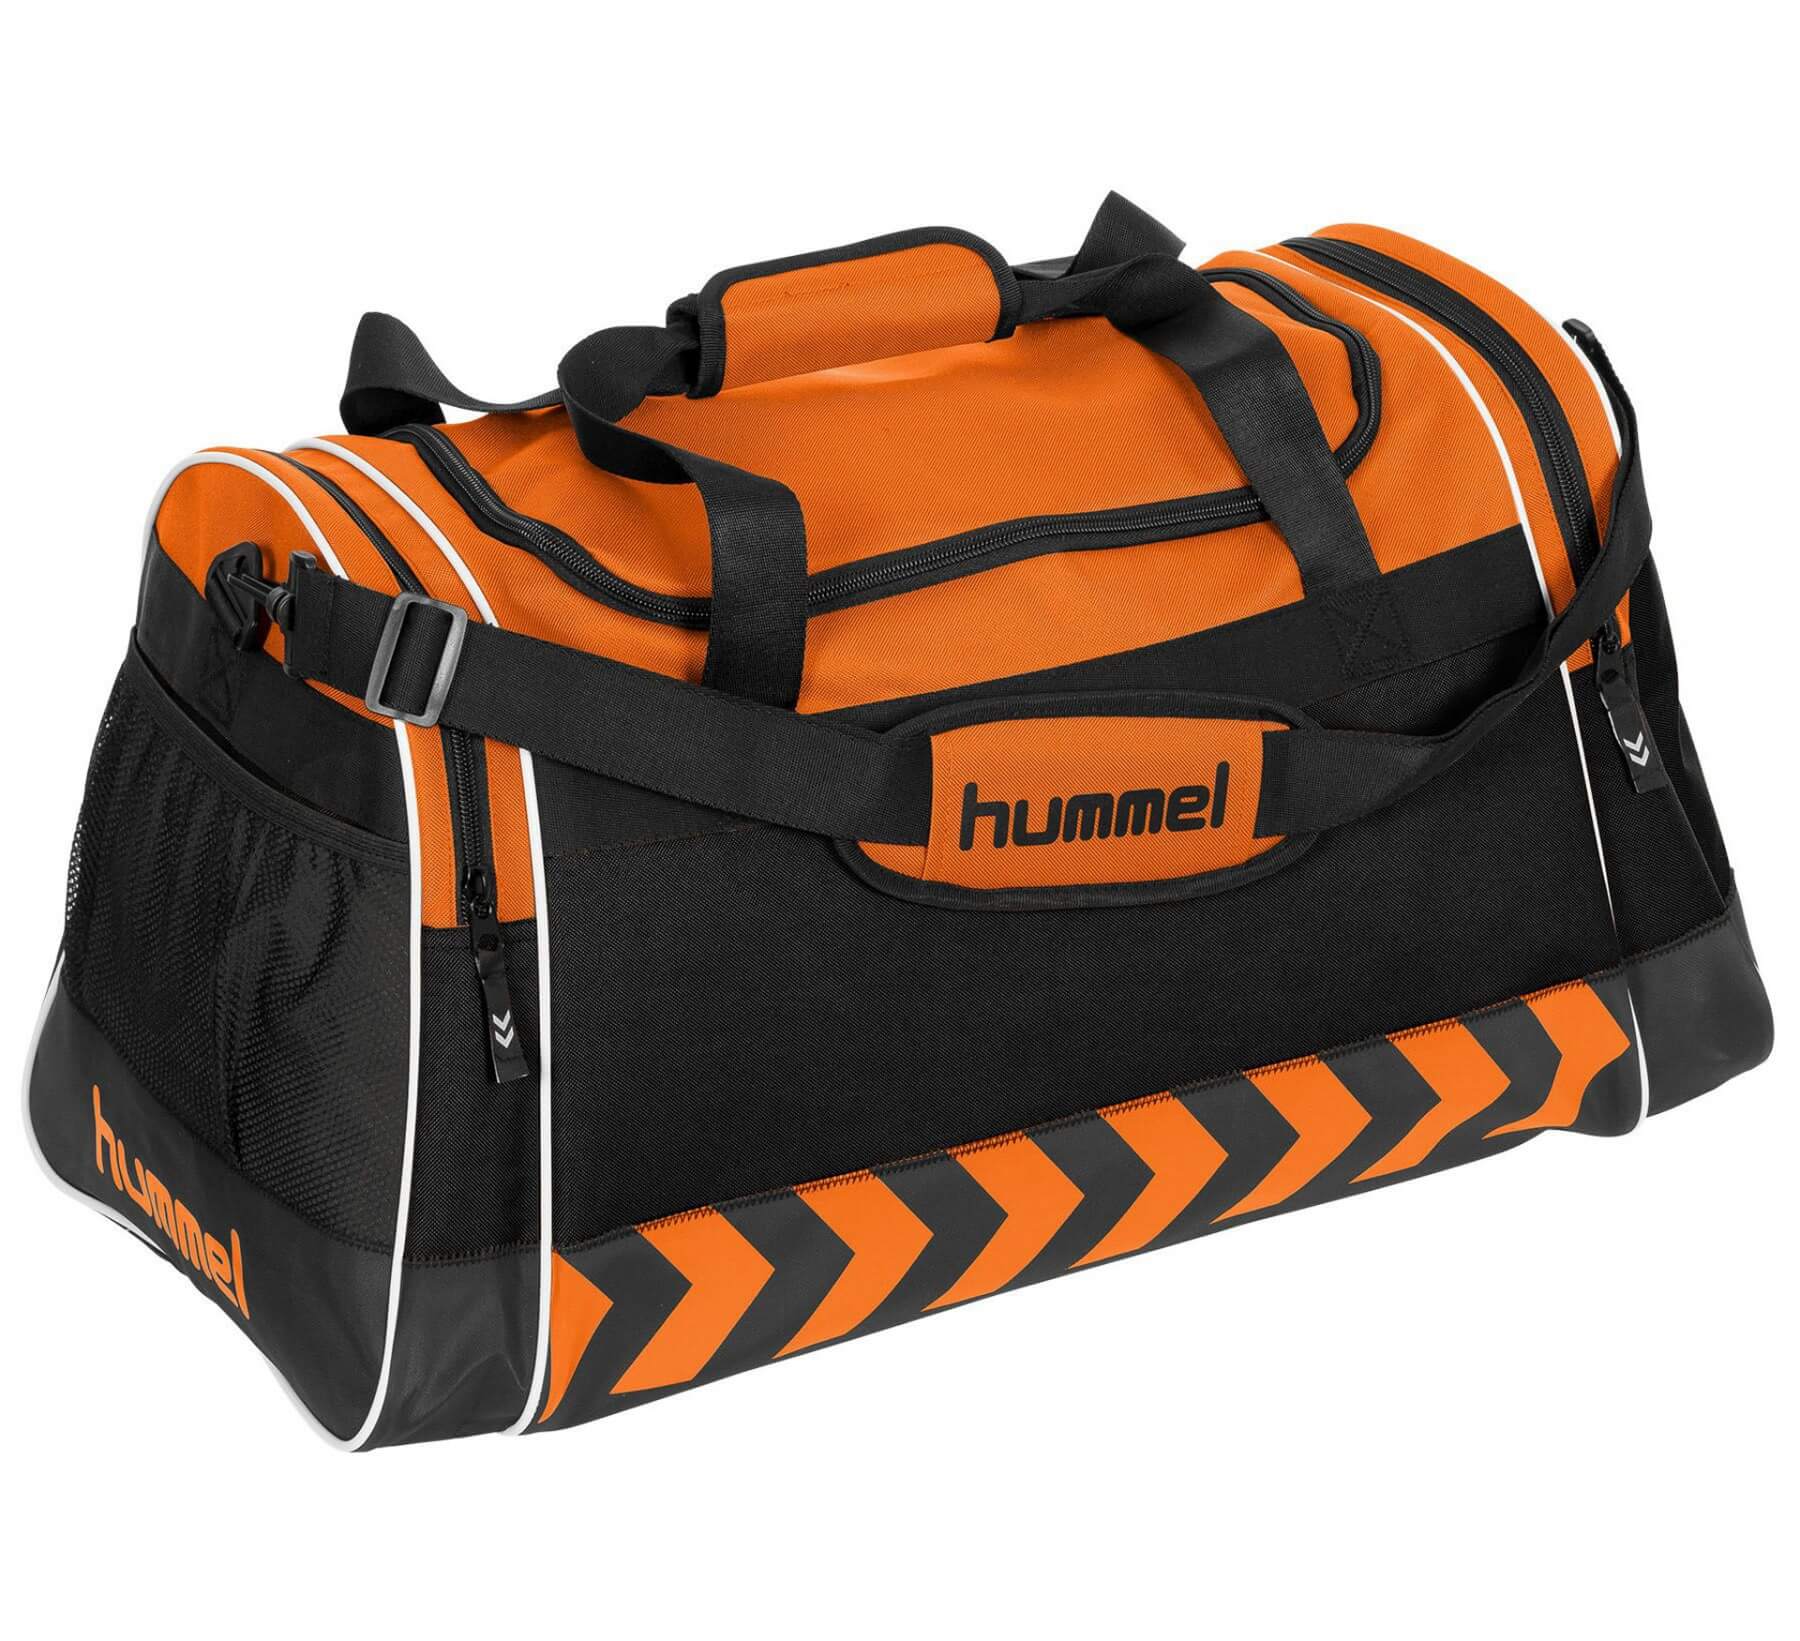 Opmerkelijk feit koppeling Hummel sporttassen bedrukken - Vanaf 1 stuk razendsnel bedrukt!